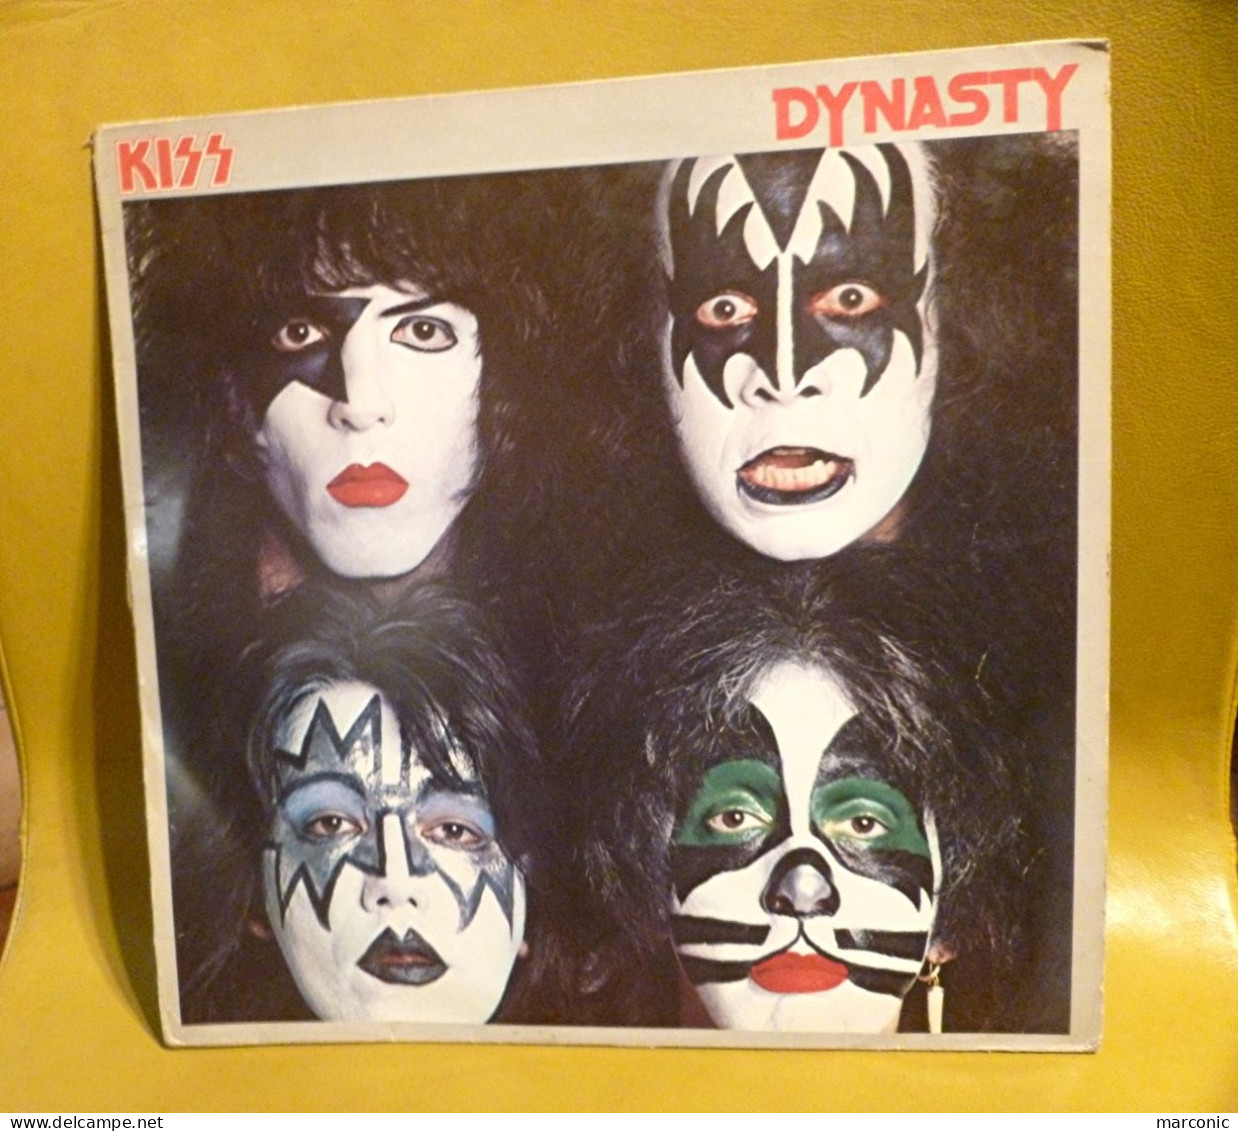 Vinyl - KISS DYNASTY - 1979 - 33 T - Otros - Canción Inglesa